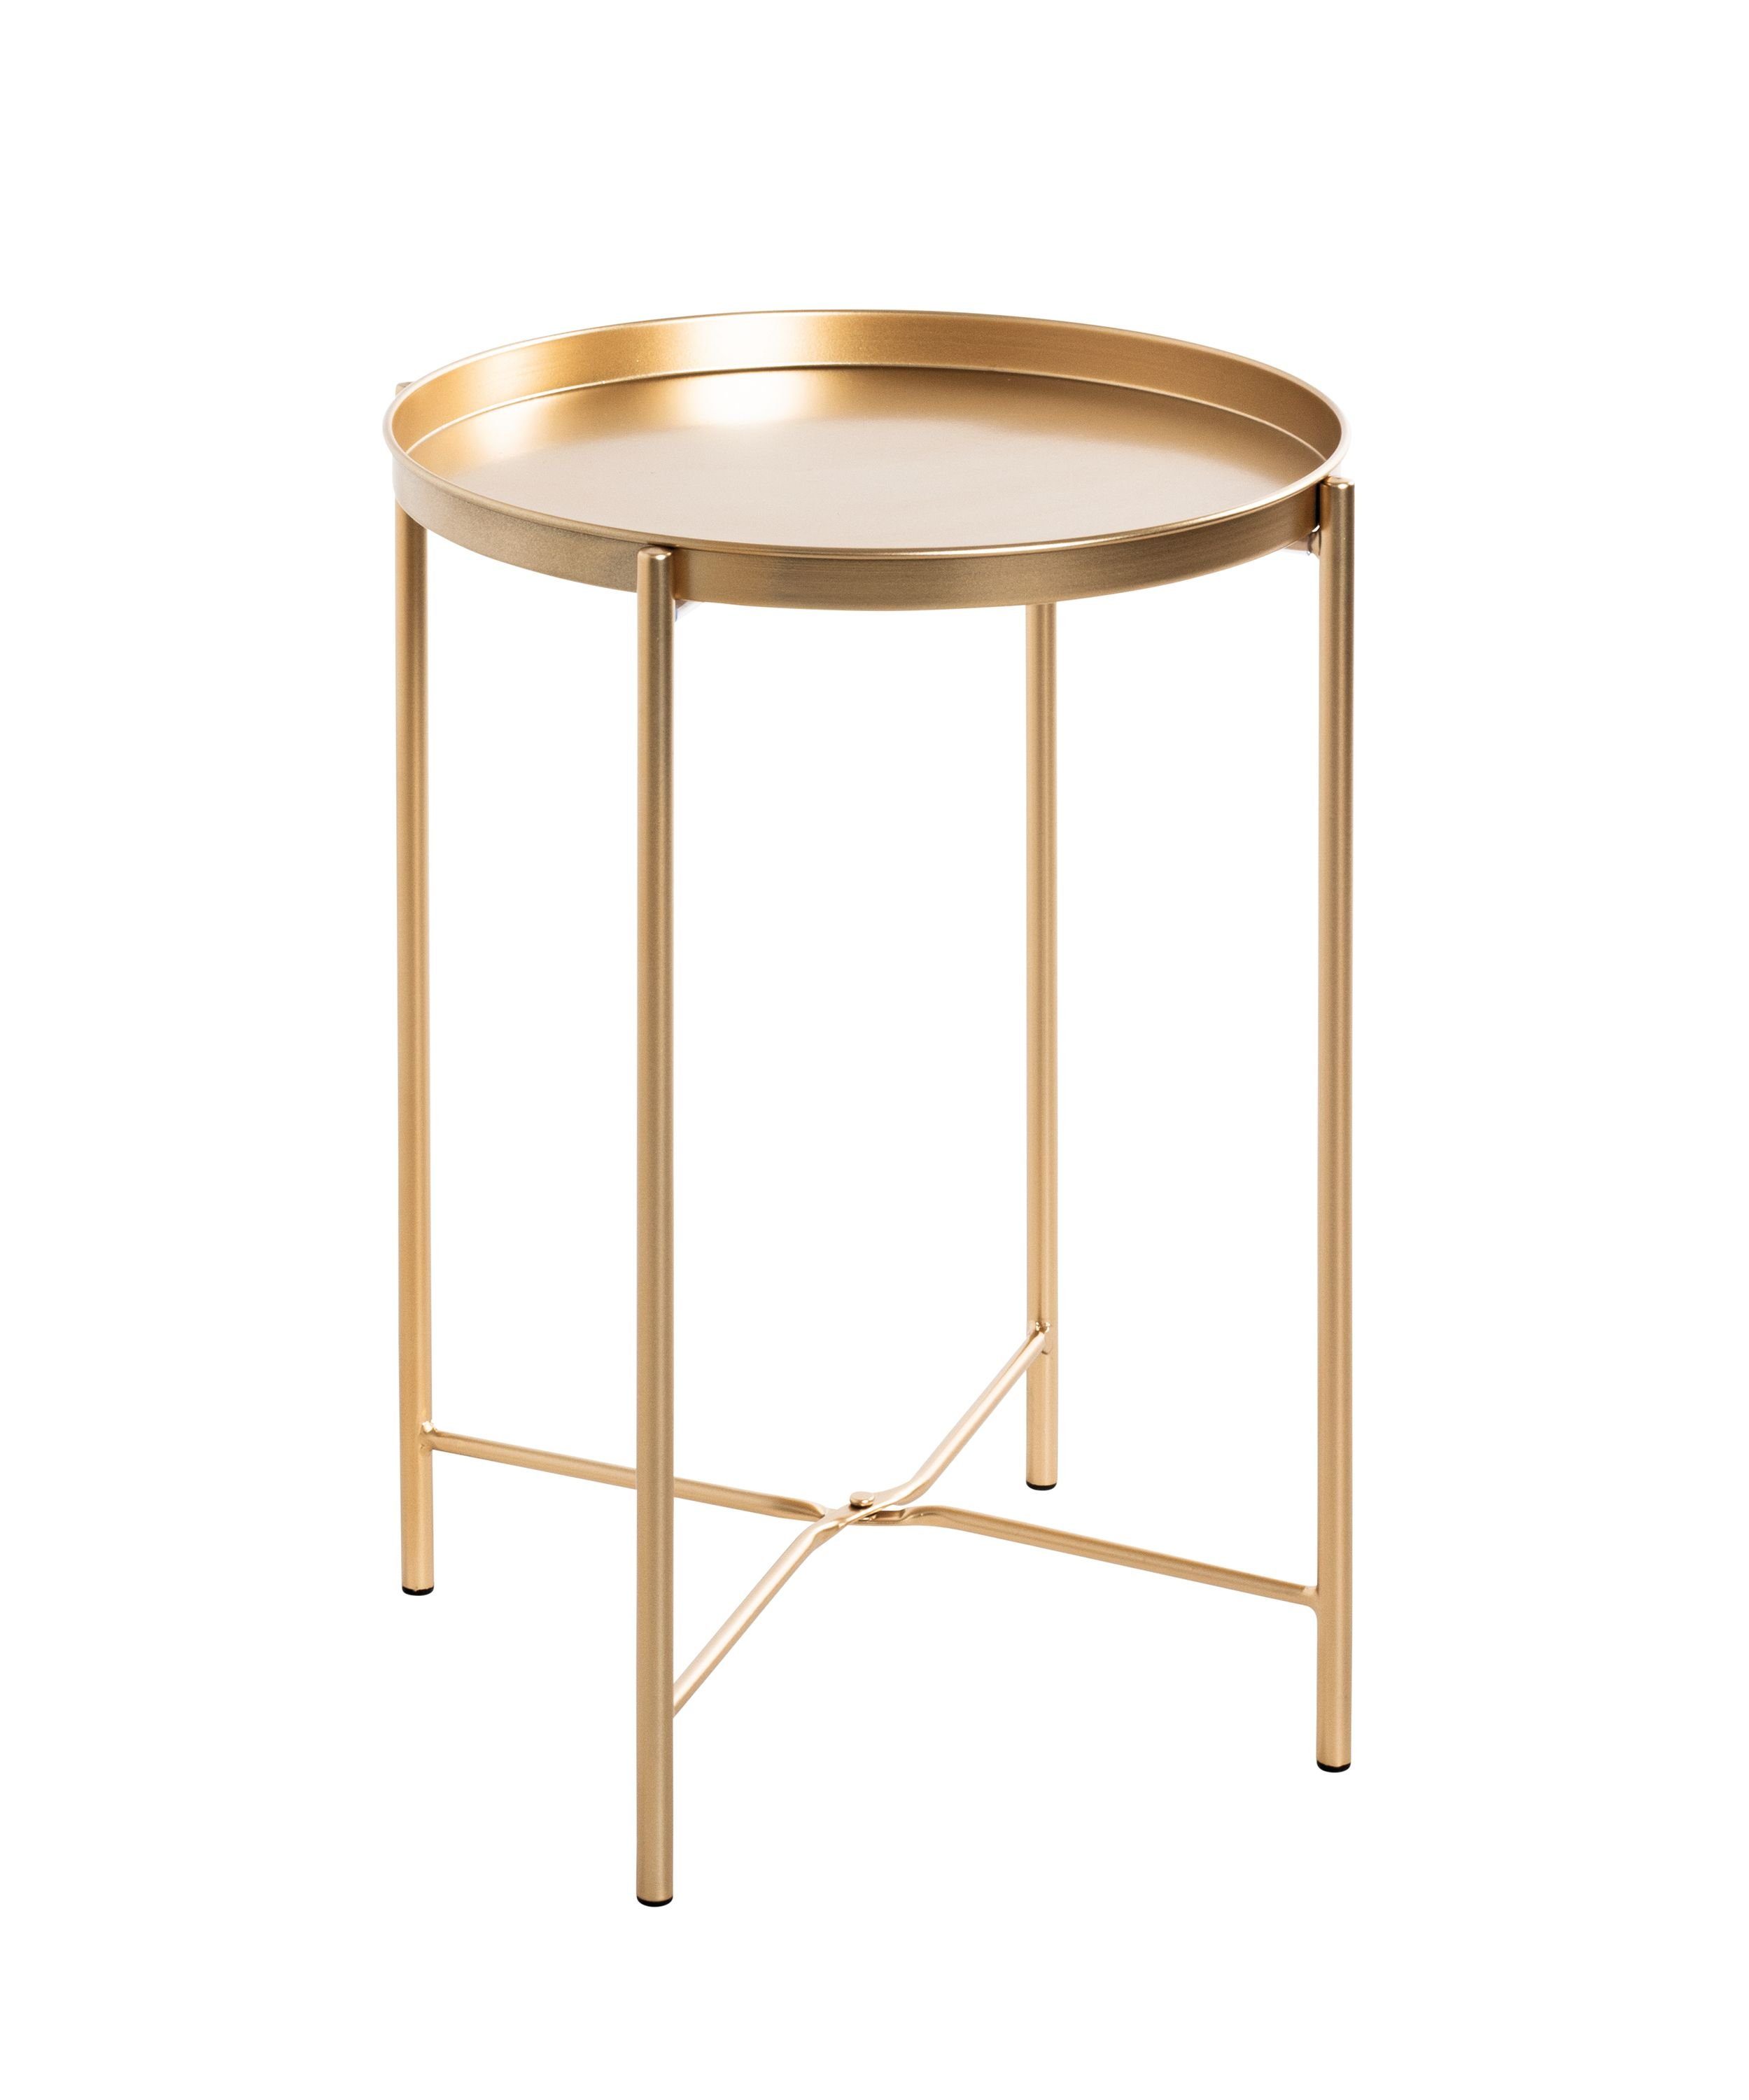 HAKU Beistelltisch Beistelltisch, HAKU (DH Kaffeetisch Möbel cm) 39x50 39x50 gold Beistelltisch DH cm